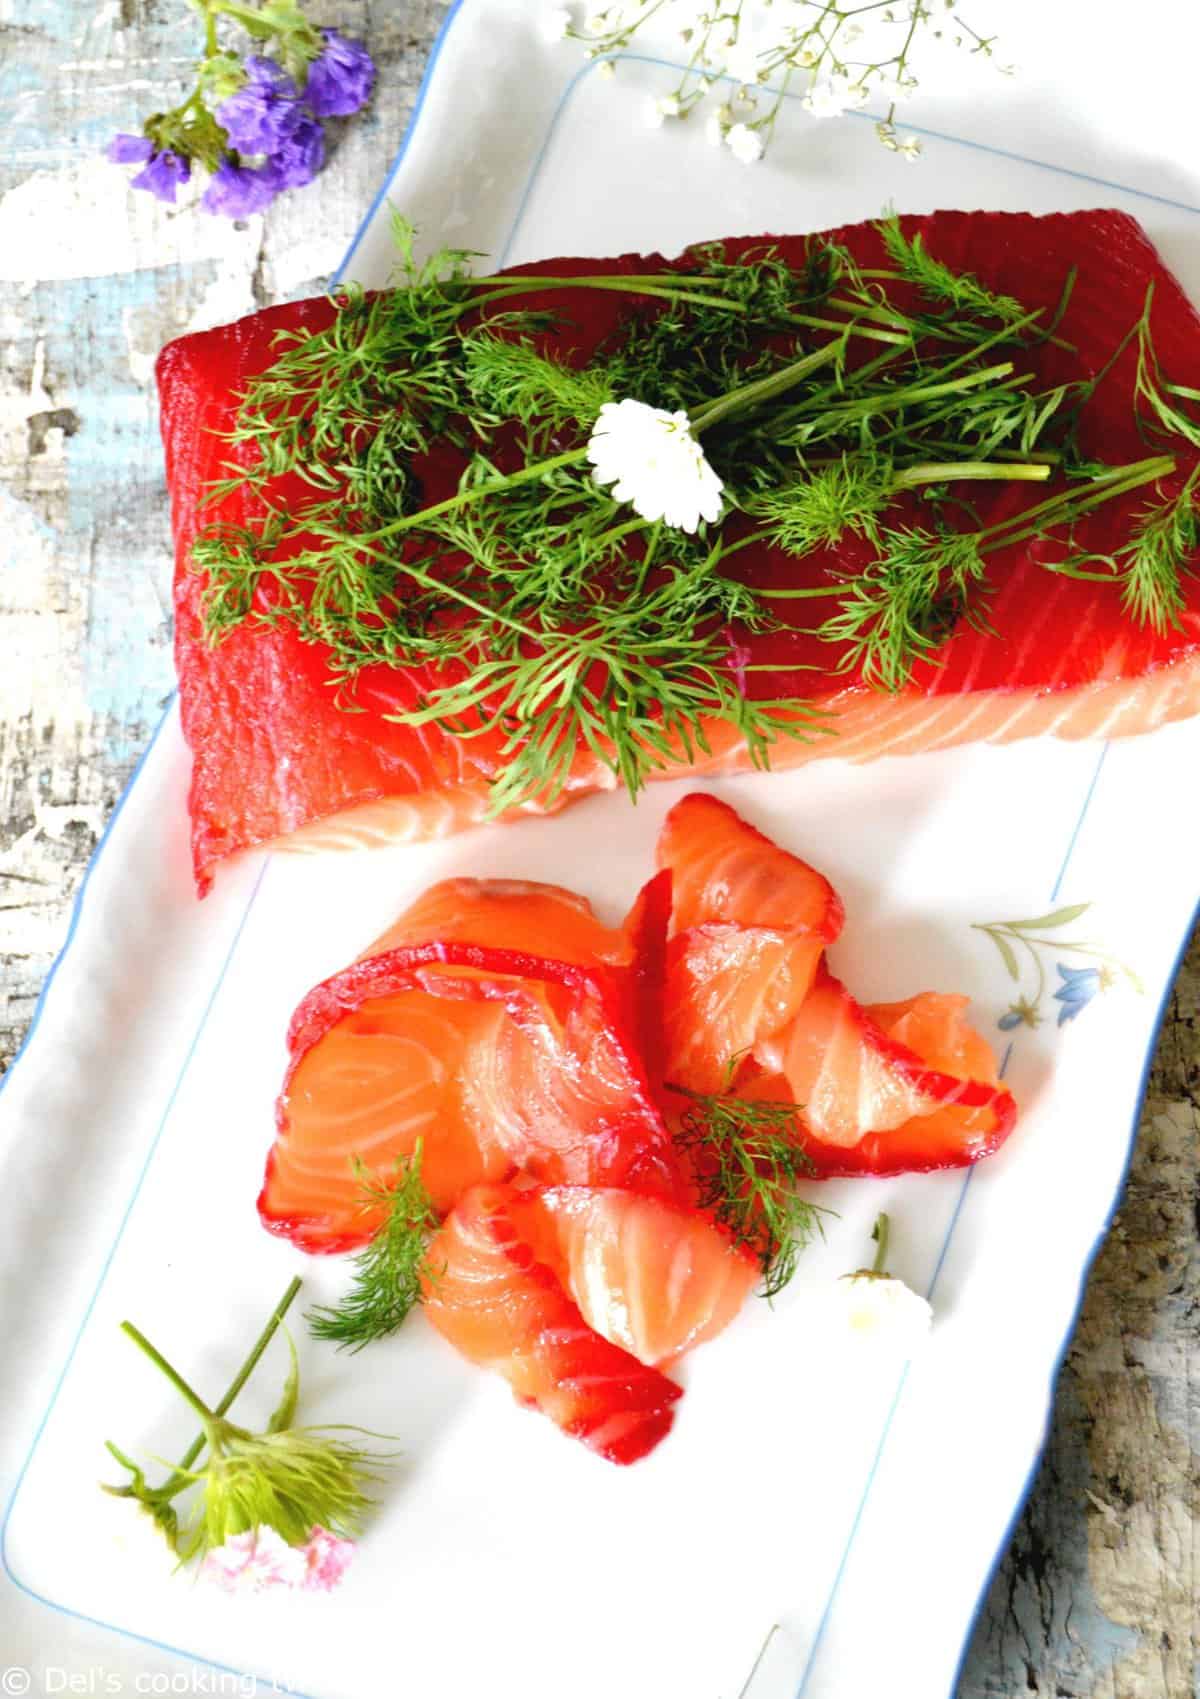 Beet-Cured Salmon Gravlax with Horseradish — Del's cooking twist